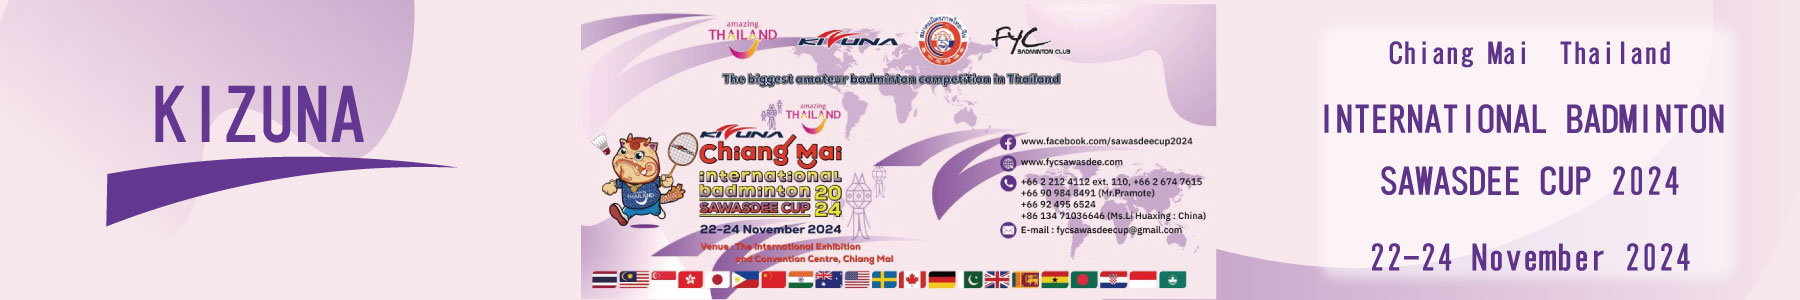 Kizuna Chiang mai International Badminton Sawasdee Cup 2024